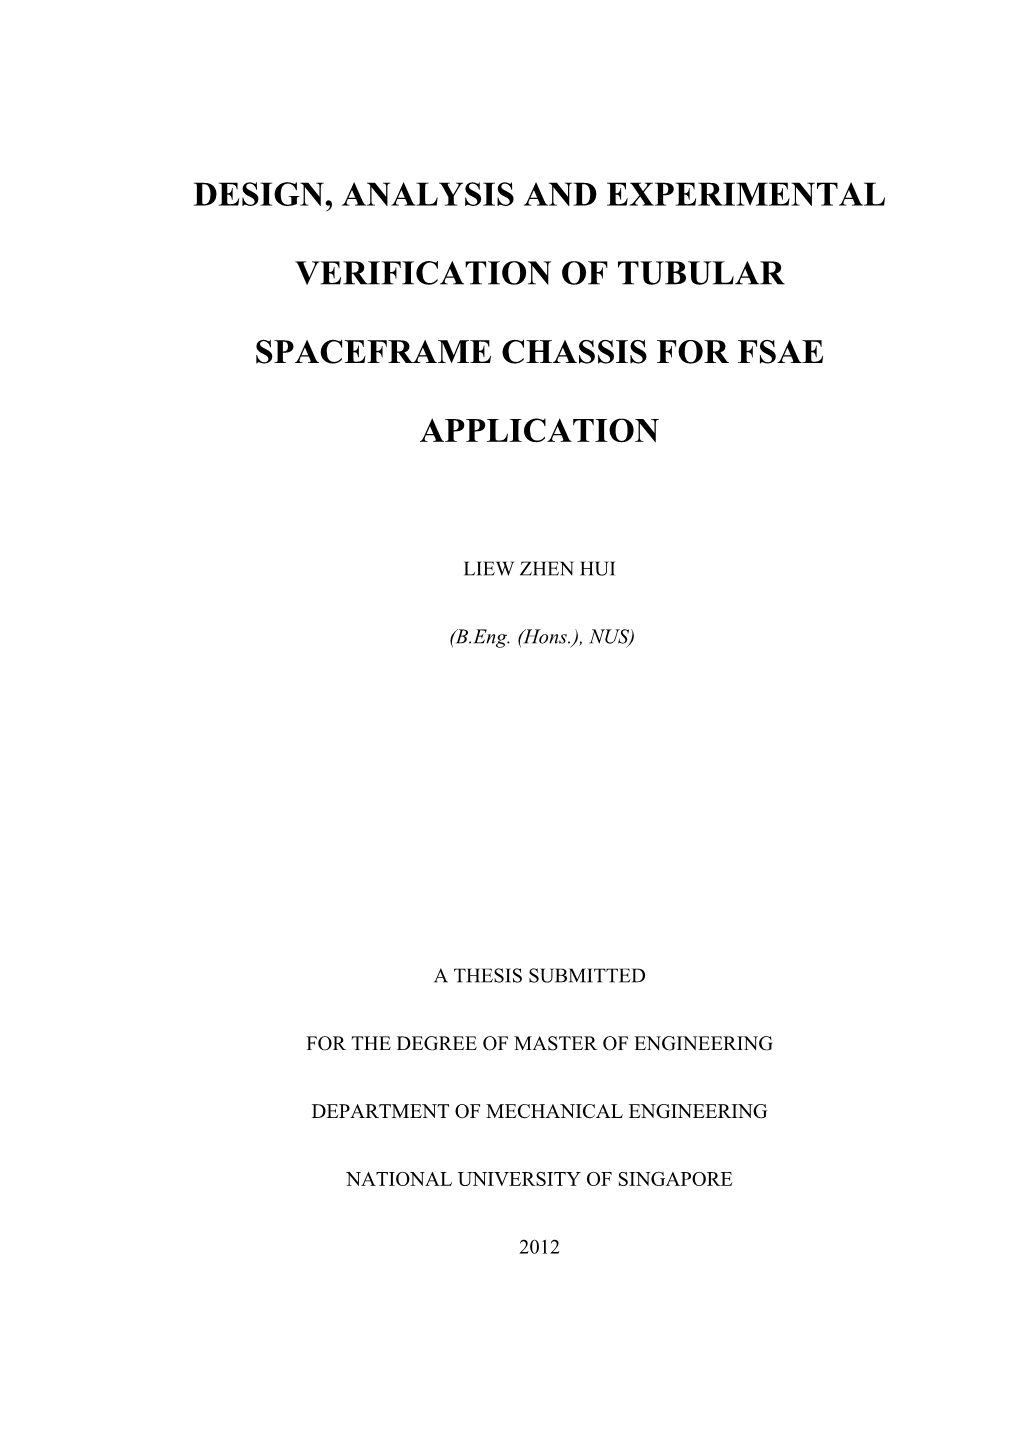 Design, Analysis and Experimental Verification of Tubular Spaceframe